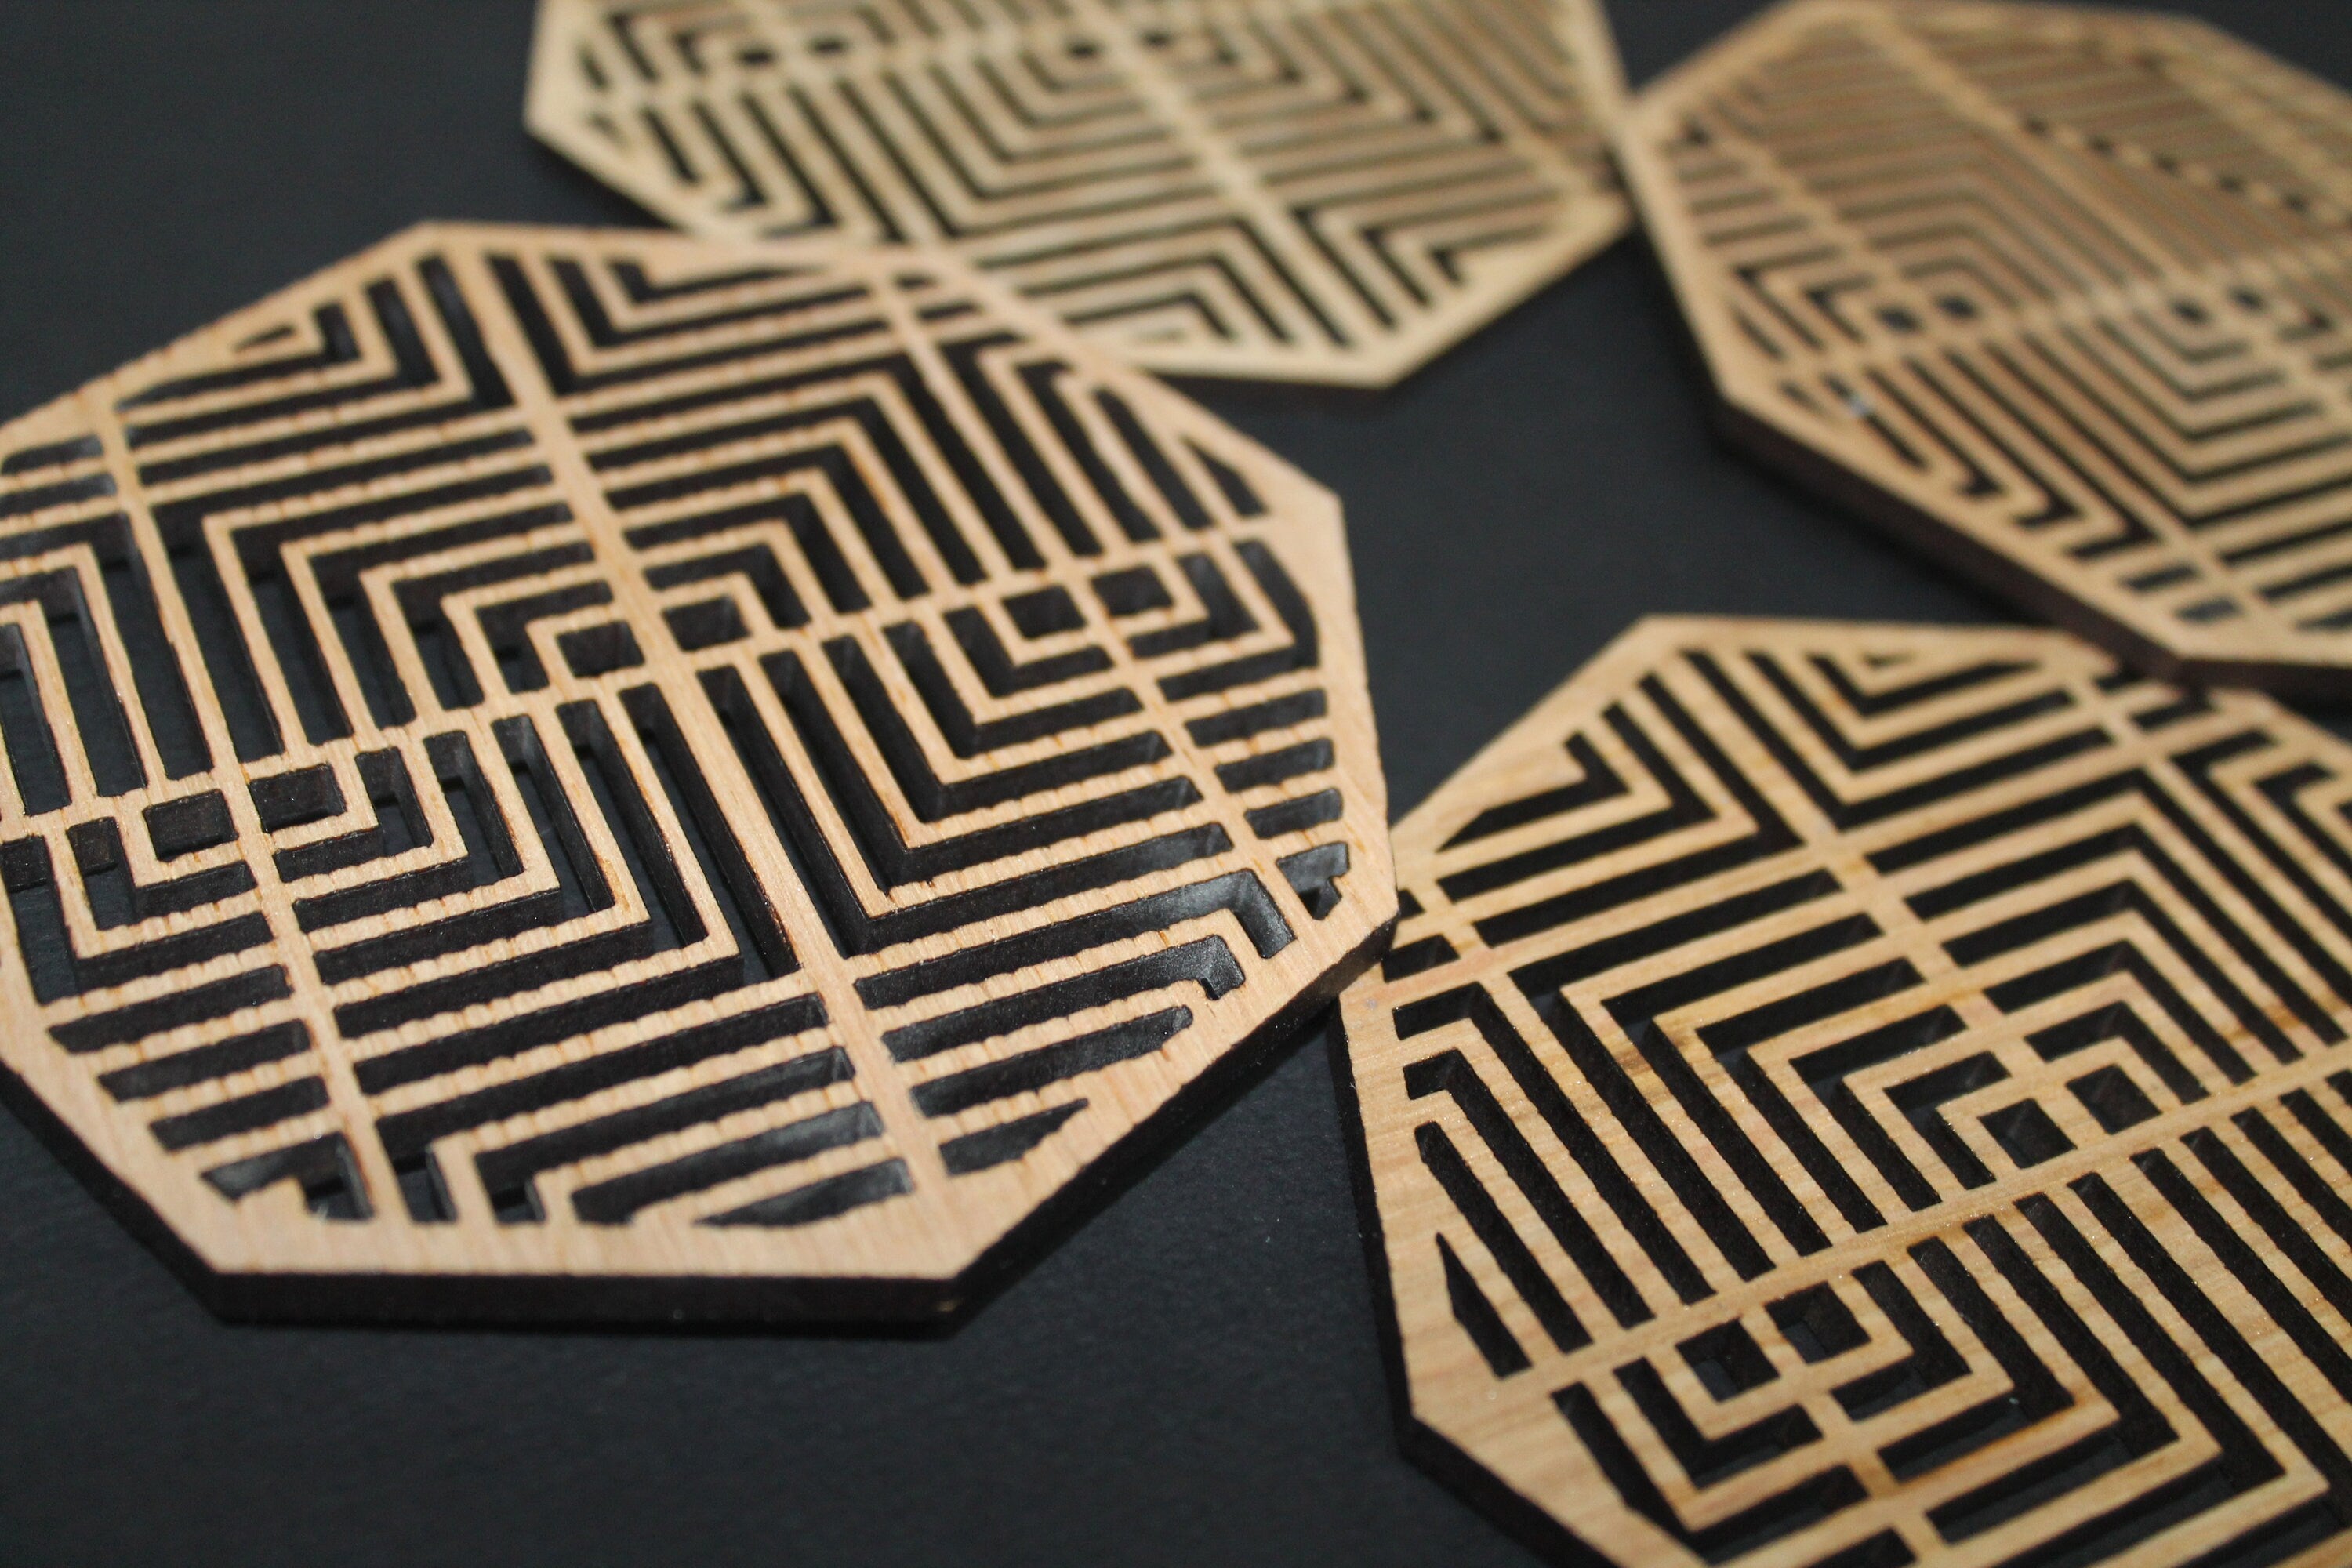 Maciza Mexican Geometric Coasters Set of 4 Laser Cut Oak Wood